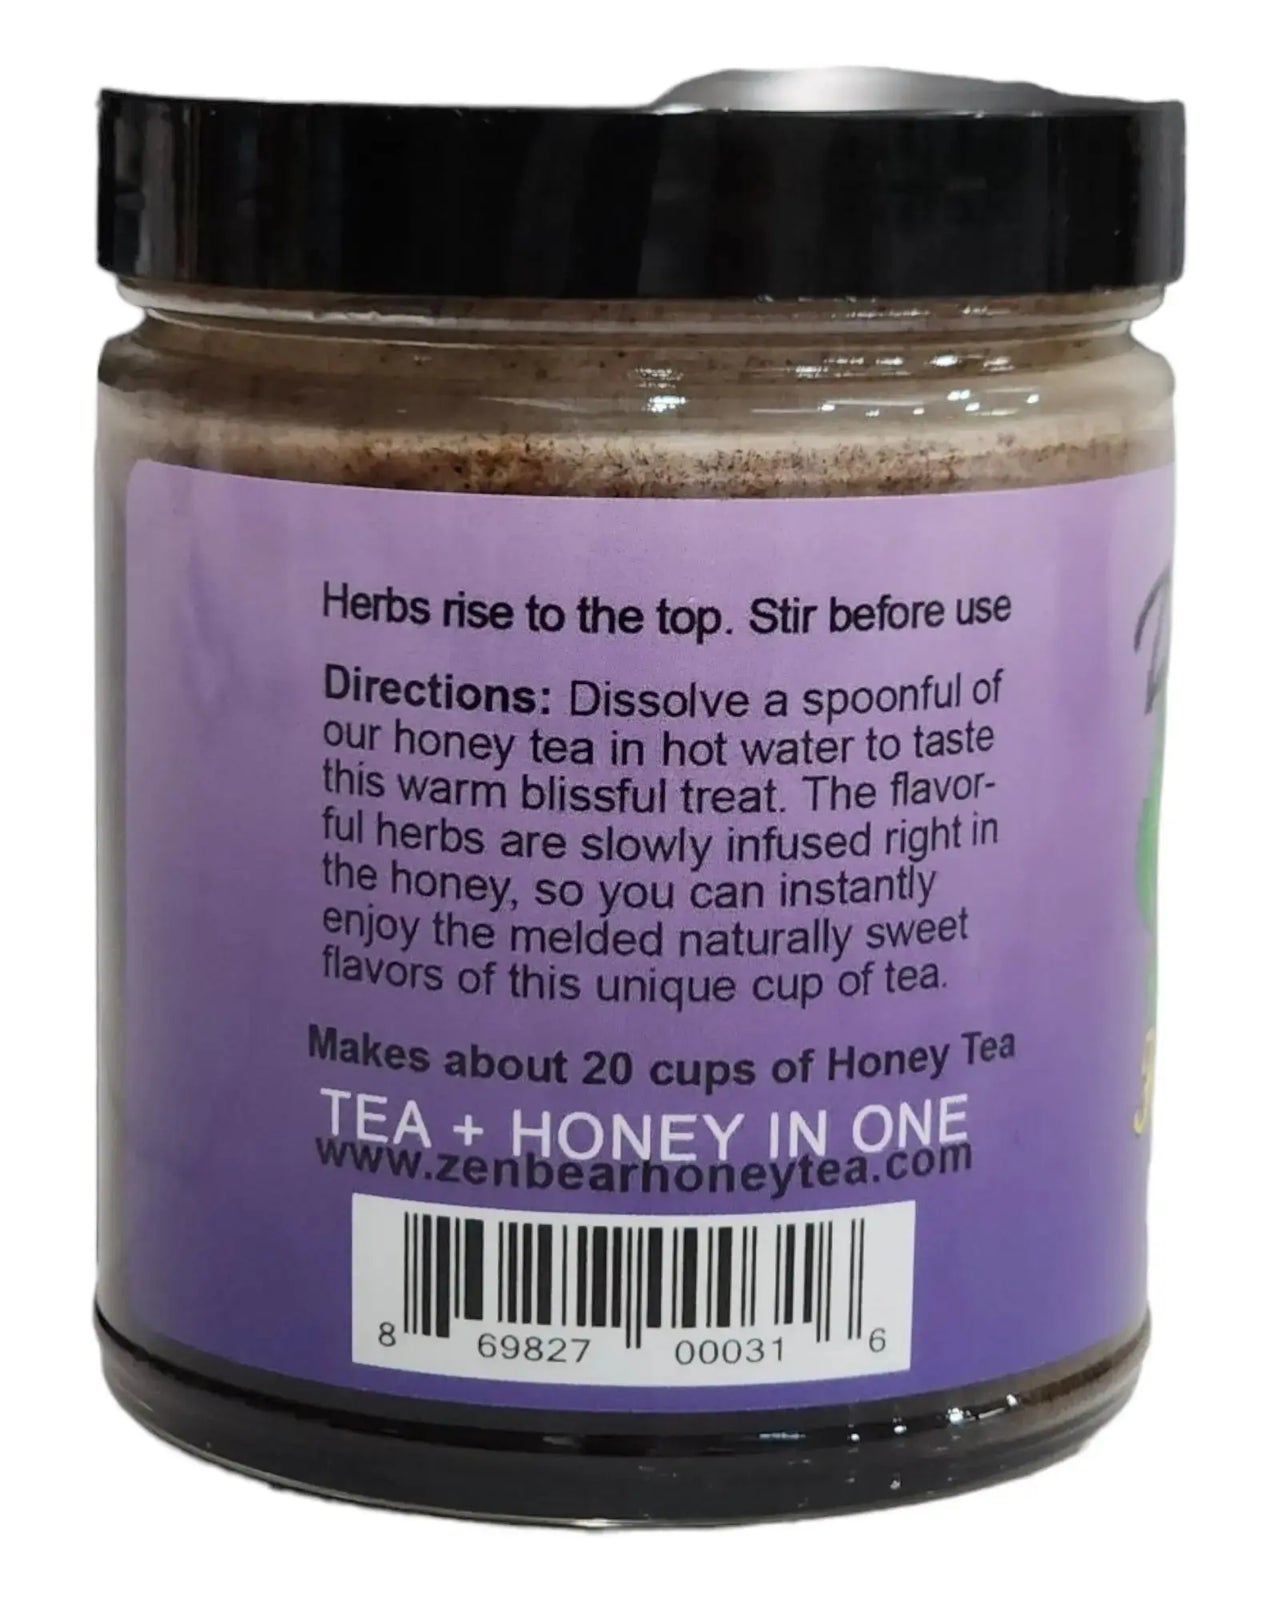 Organic Blue Moon Honey Tea - Zenbear Honey Tea